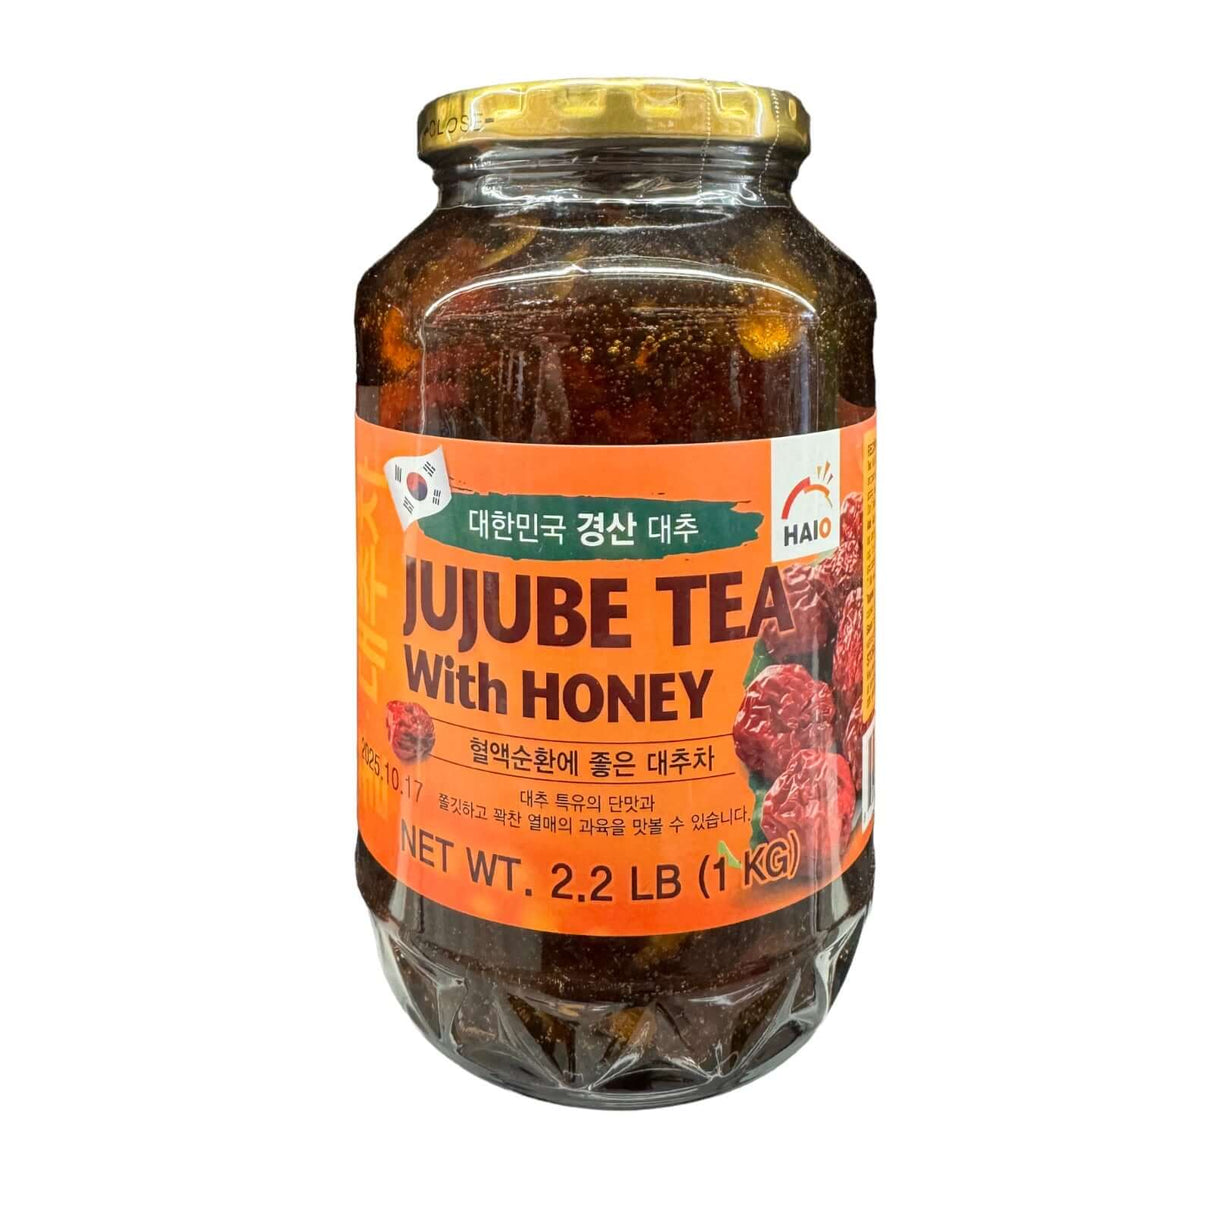 Haio Jujube Tea with Honey